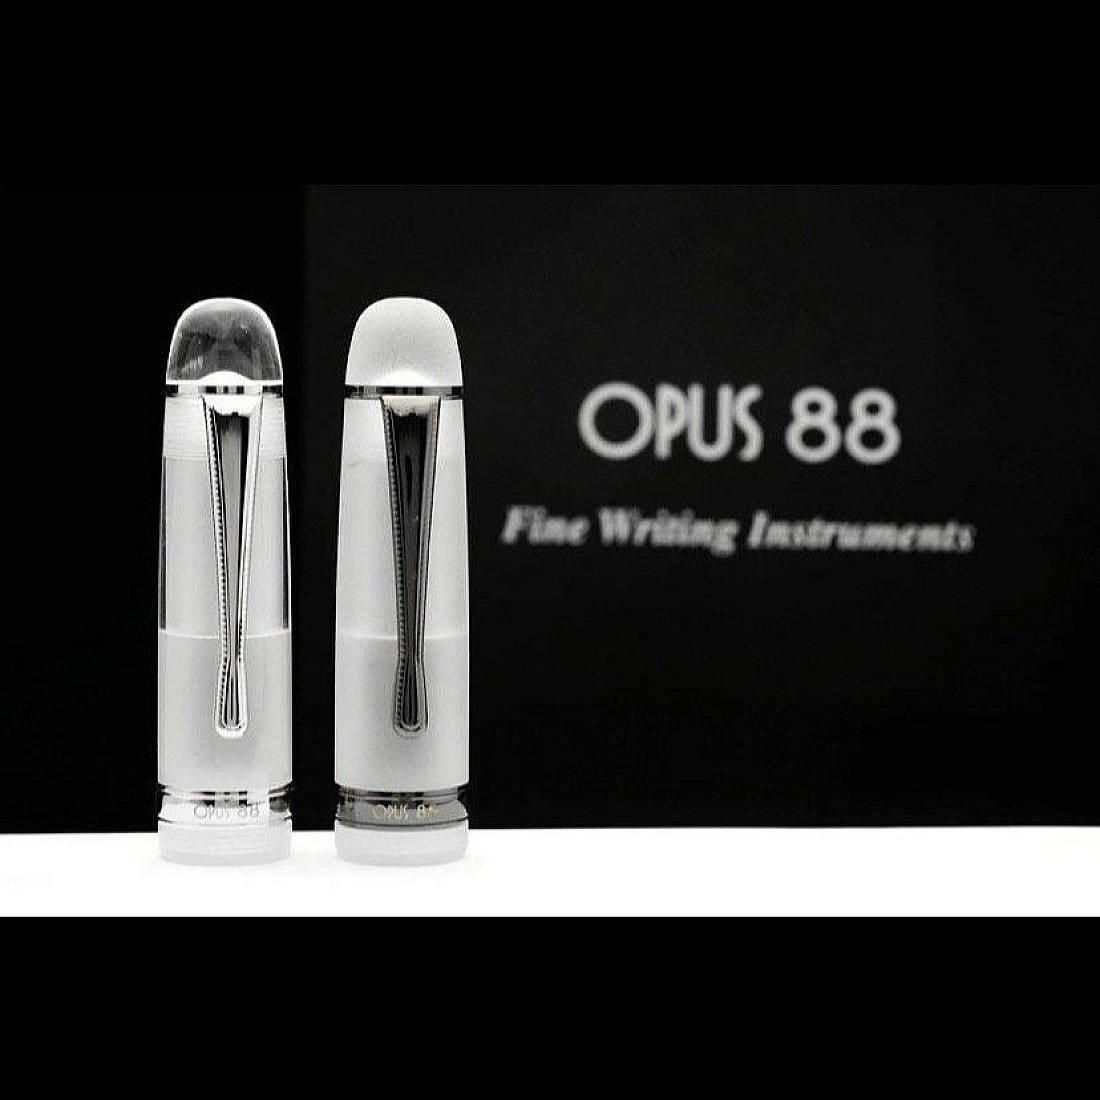 Opus 88 Jazz Holiday Clear Fountain pen